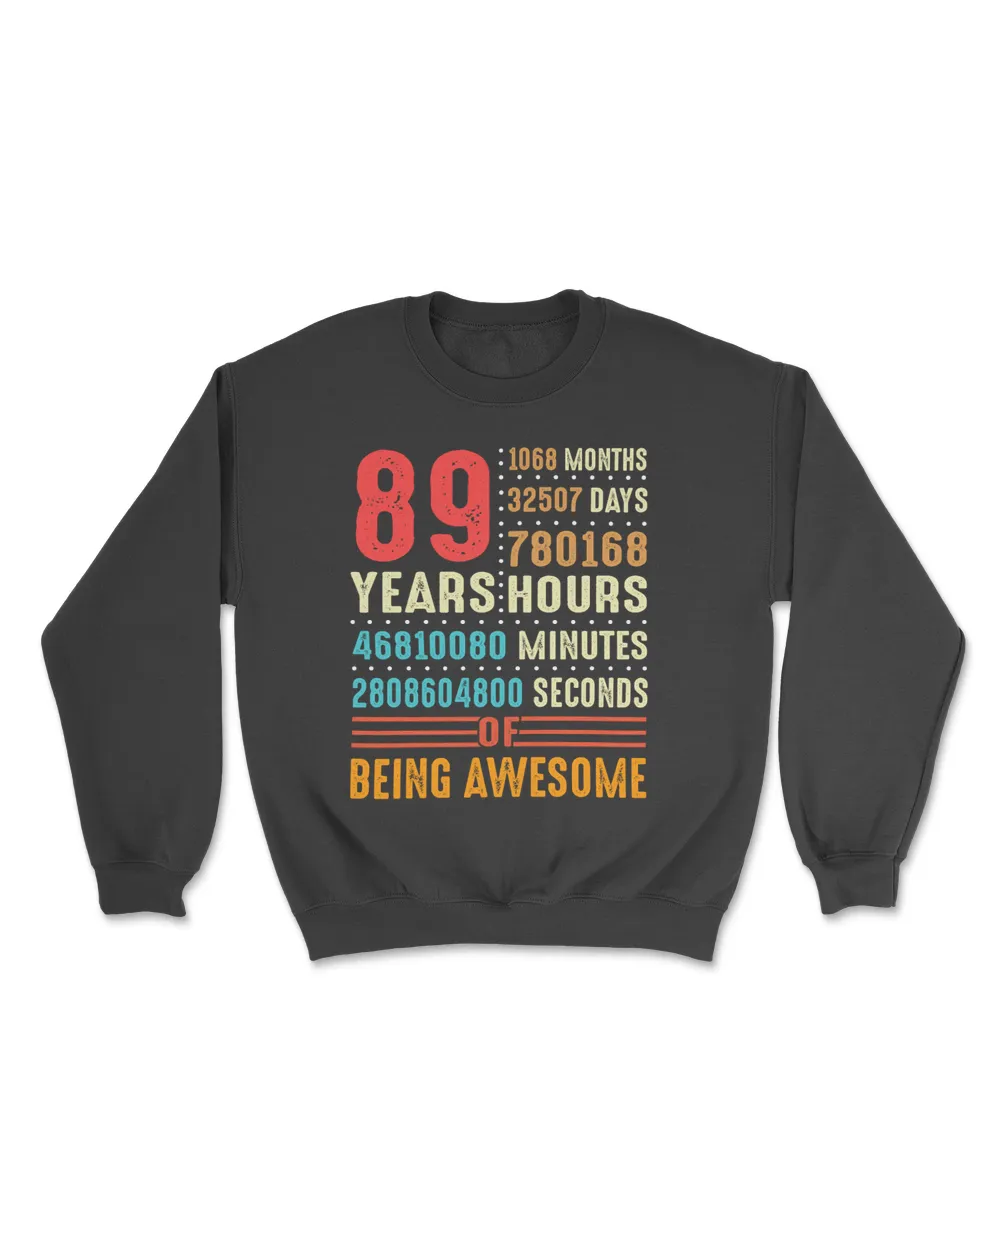 89 Years Old 89th Birthday Vintage Retro T Shirt